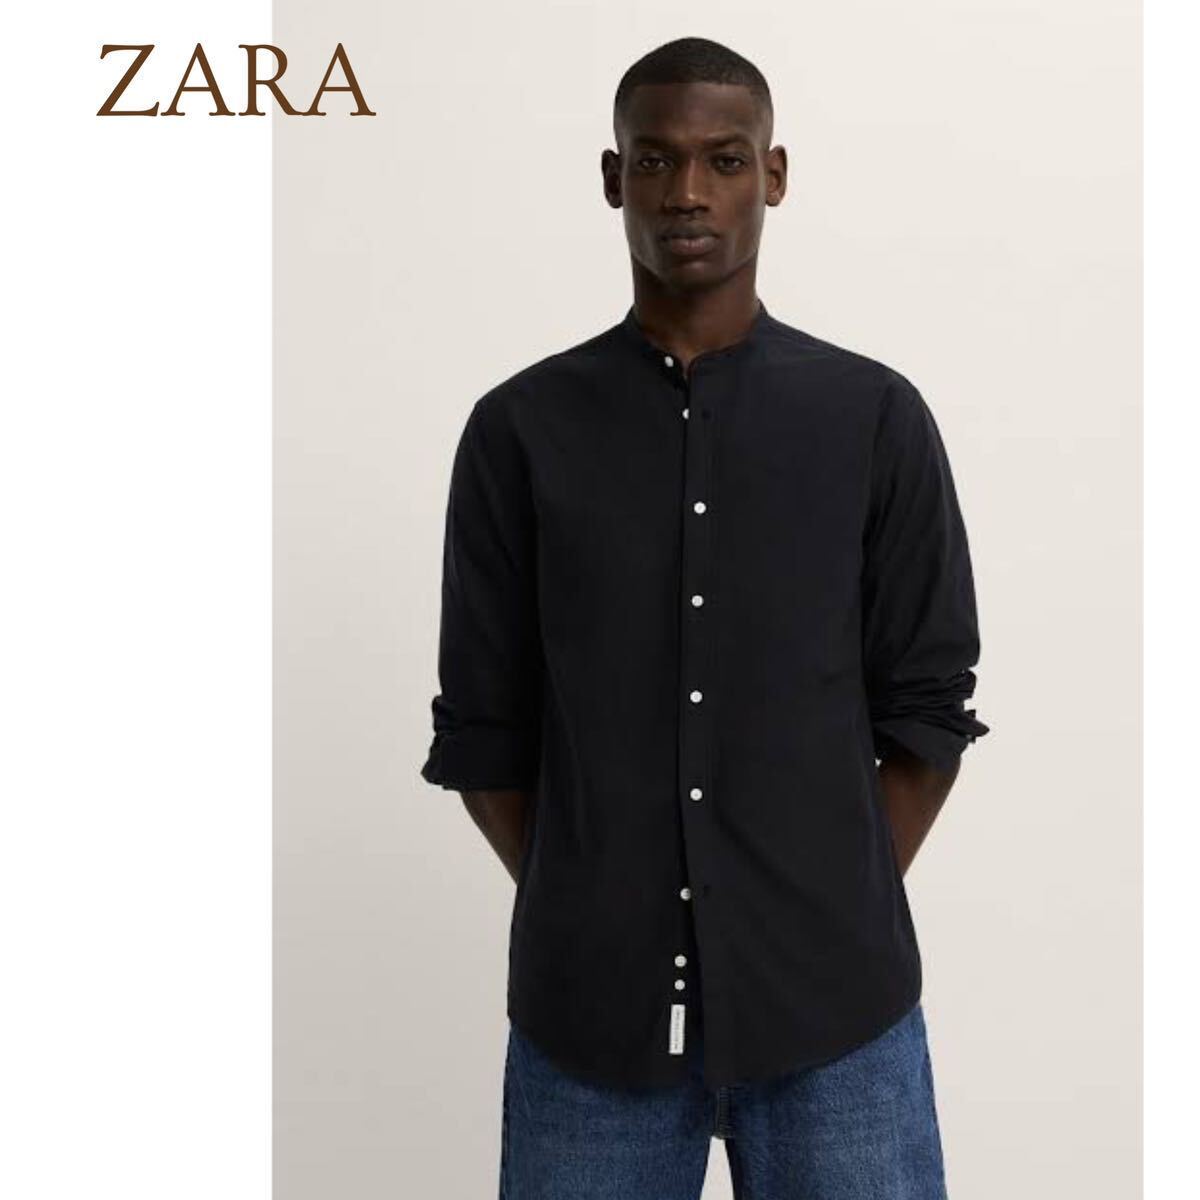 ZARA ザラ MEN'S スタンドカラー オックスフォードシャツ ゆったりシルエット 長袖シャツ コットン 長袖 Lサイズ メンズ A5369_画像1